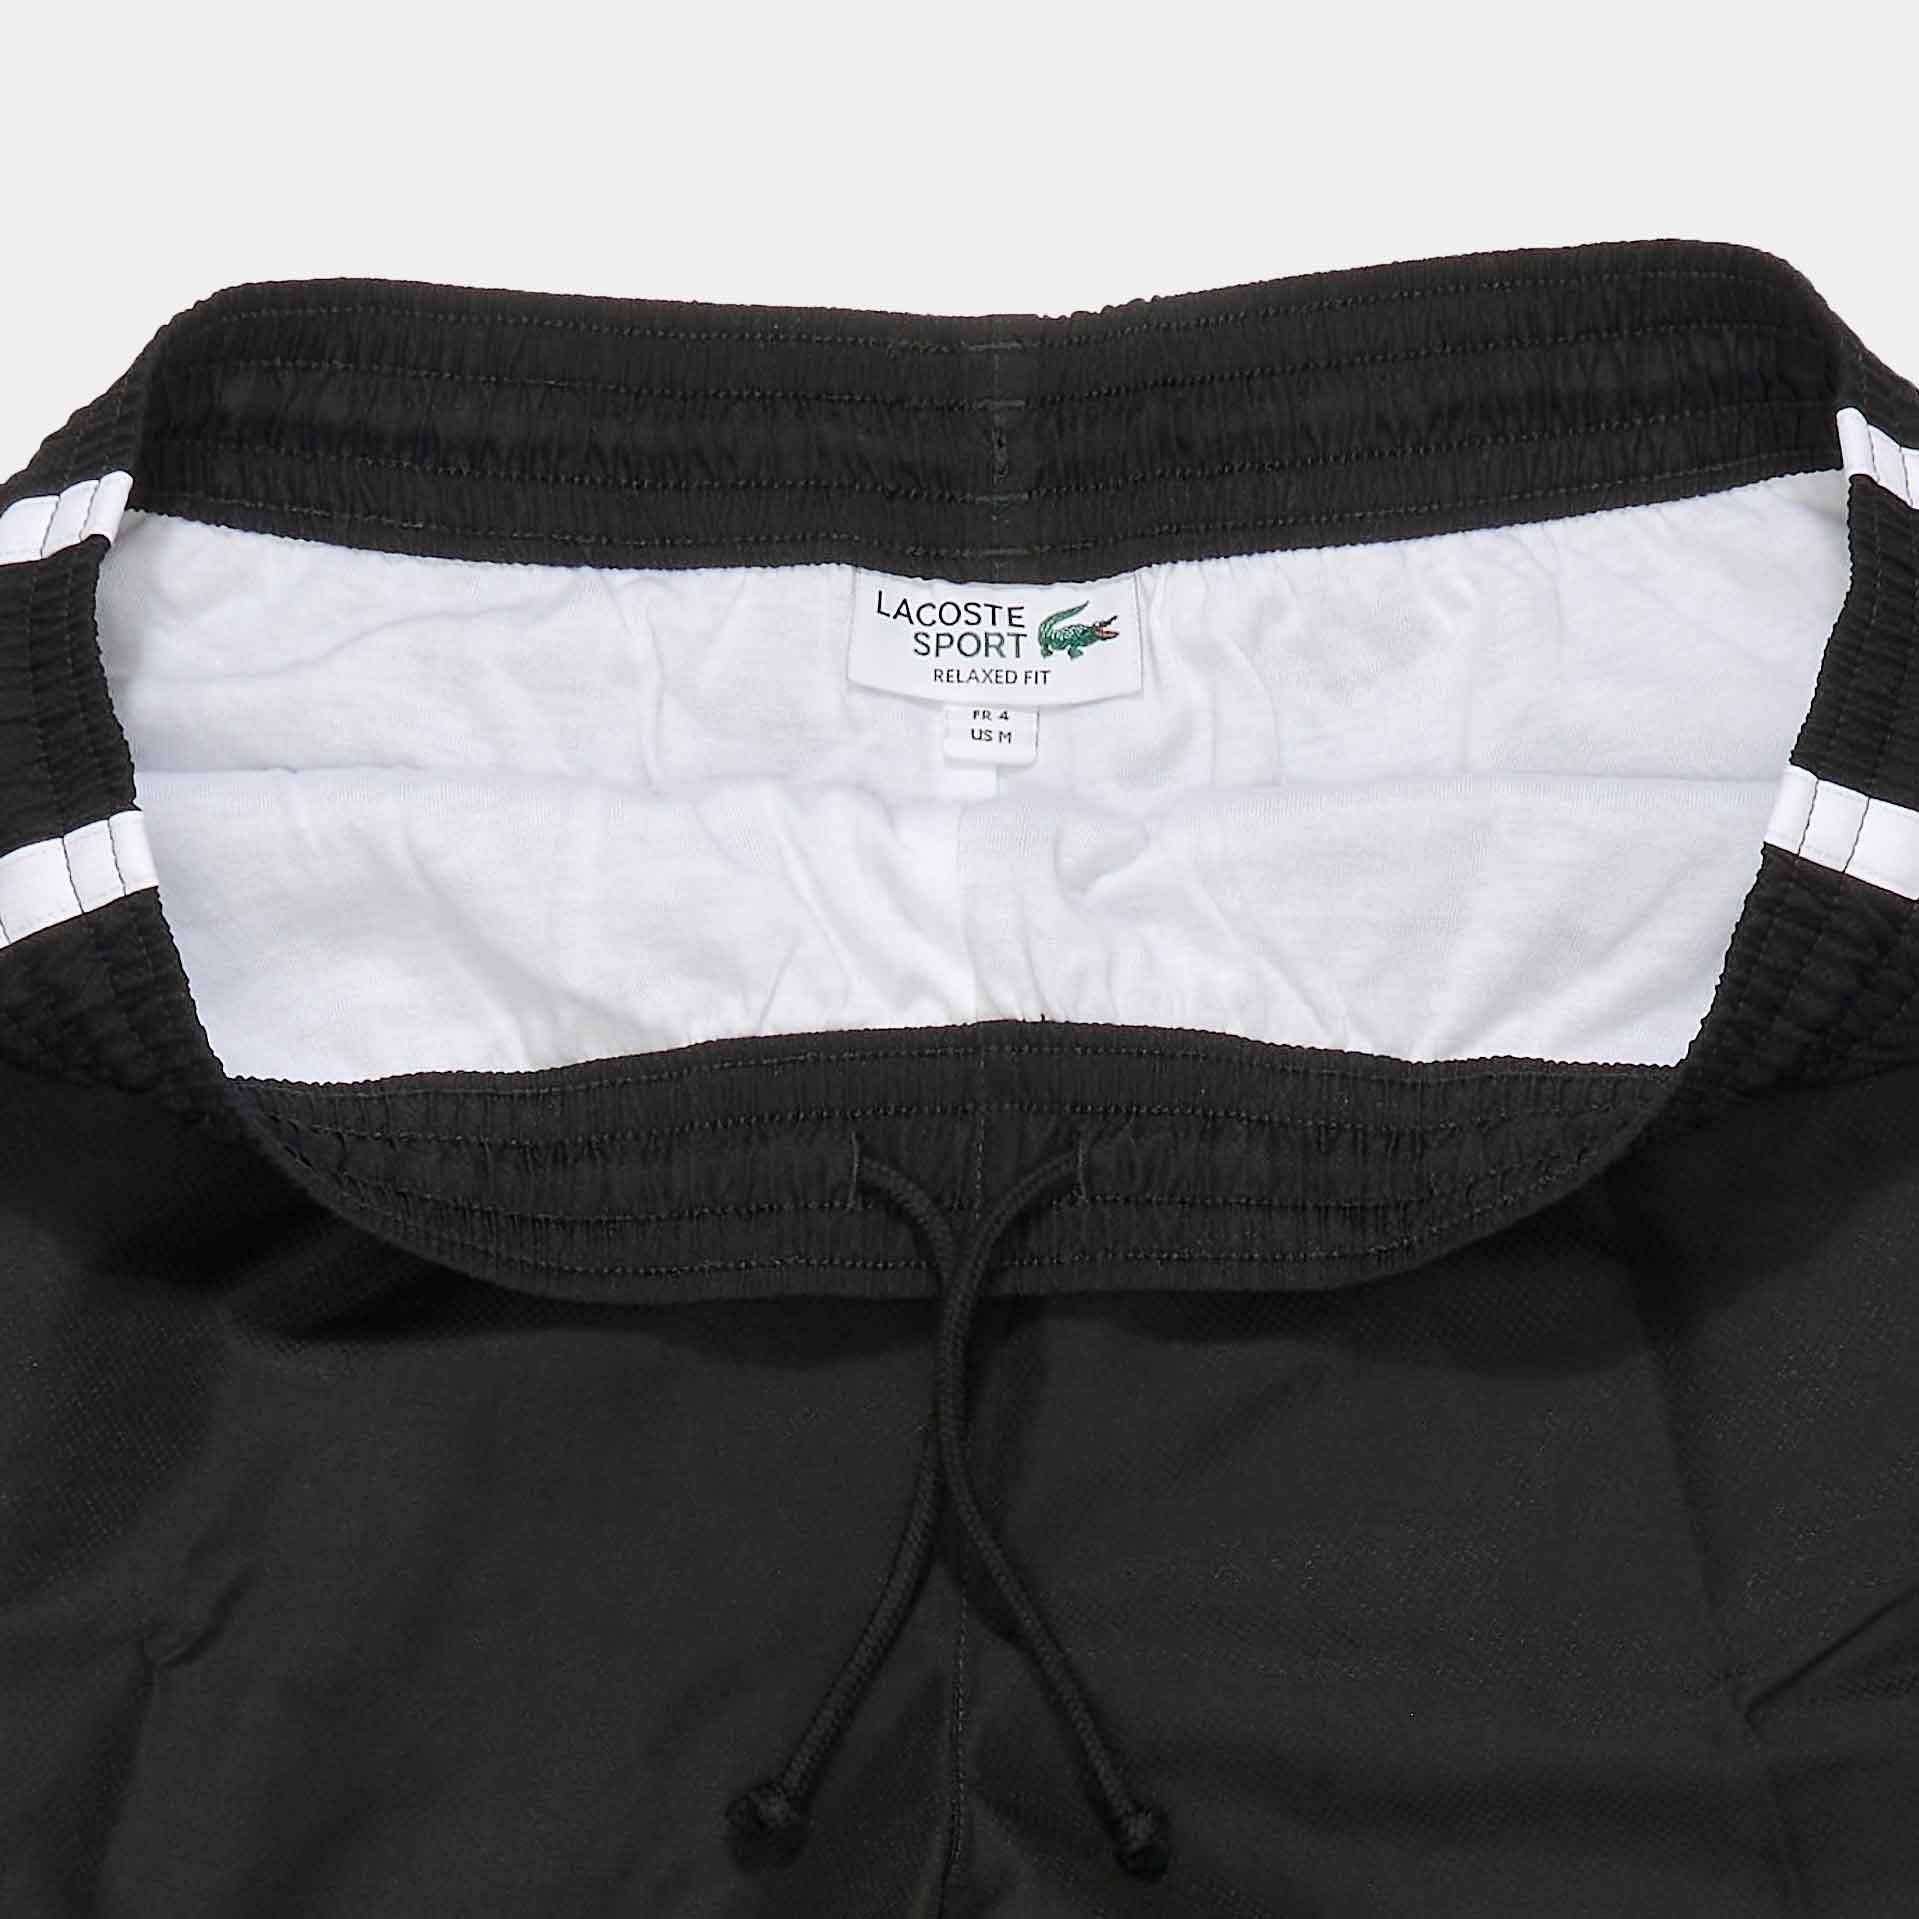 Lacoste Color Block Shorts Black/Corrida/White